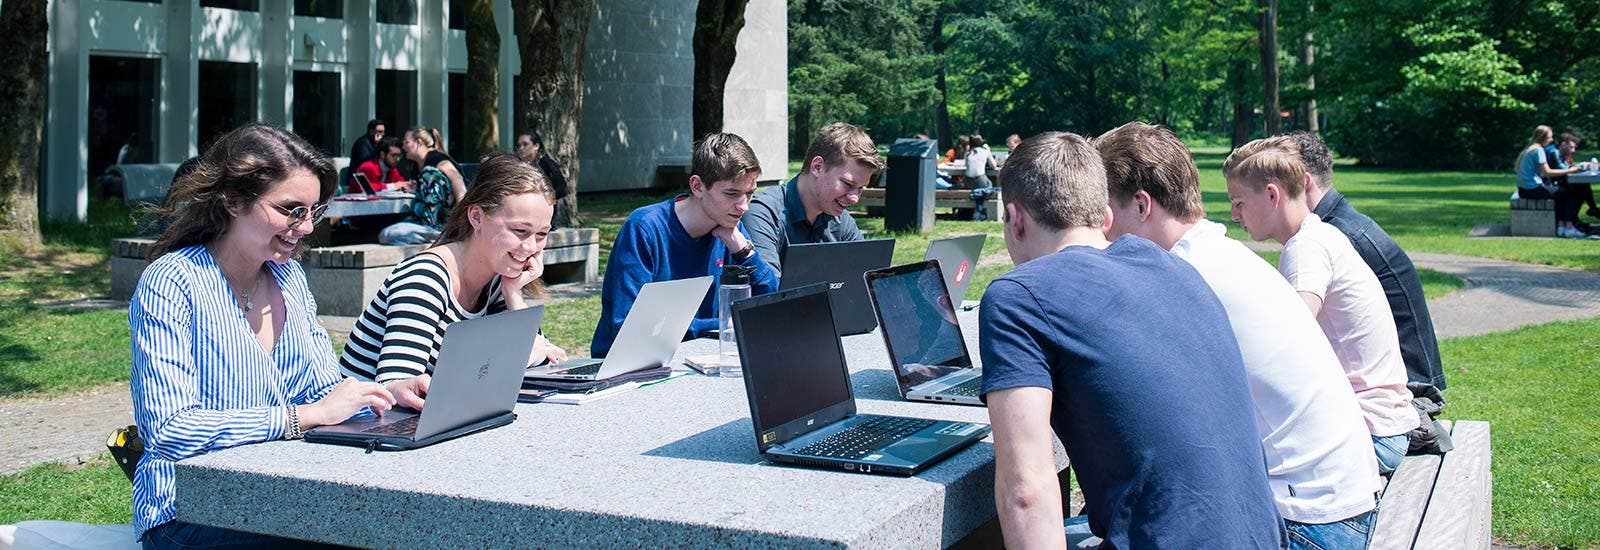 Students studying outside Tilburg University campus